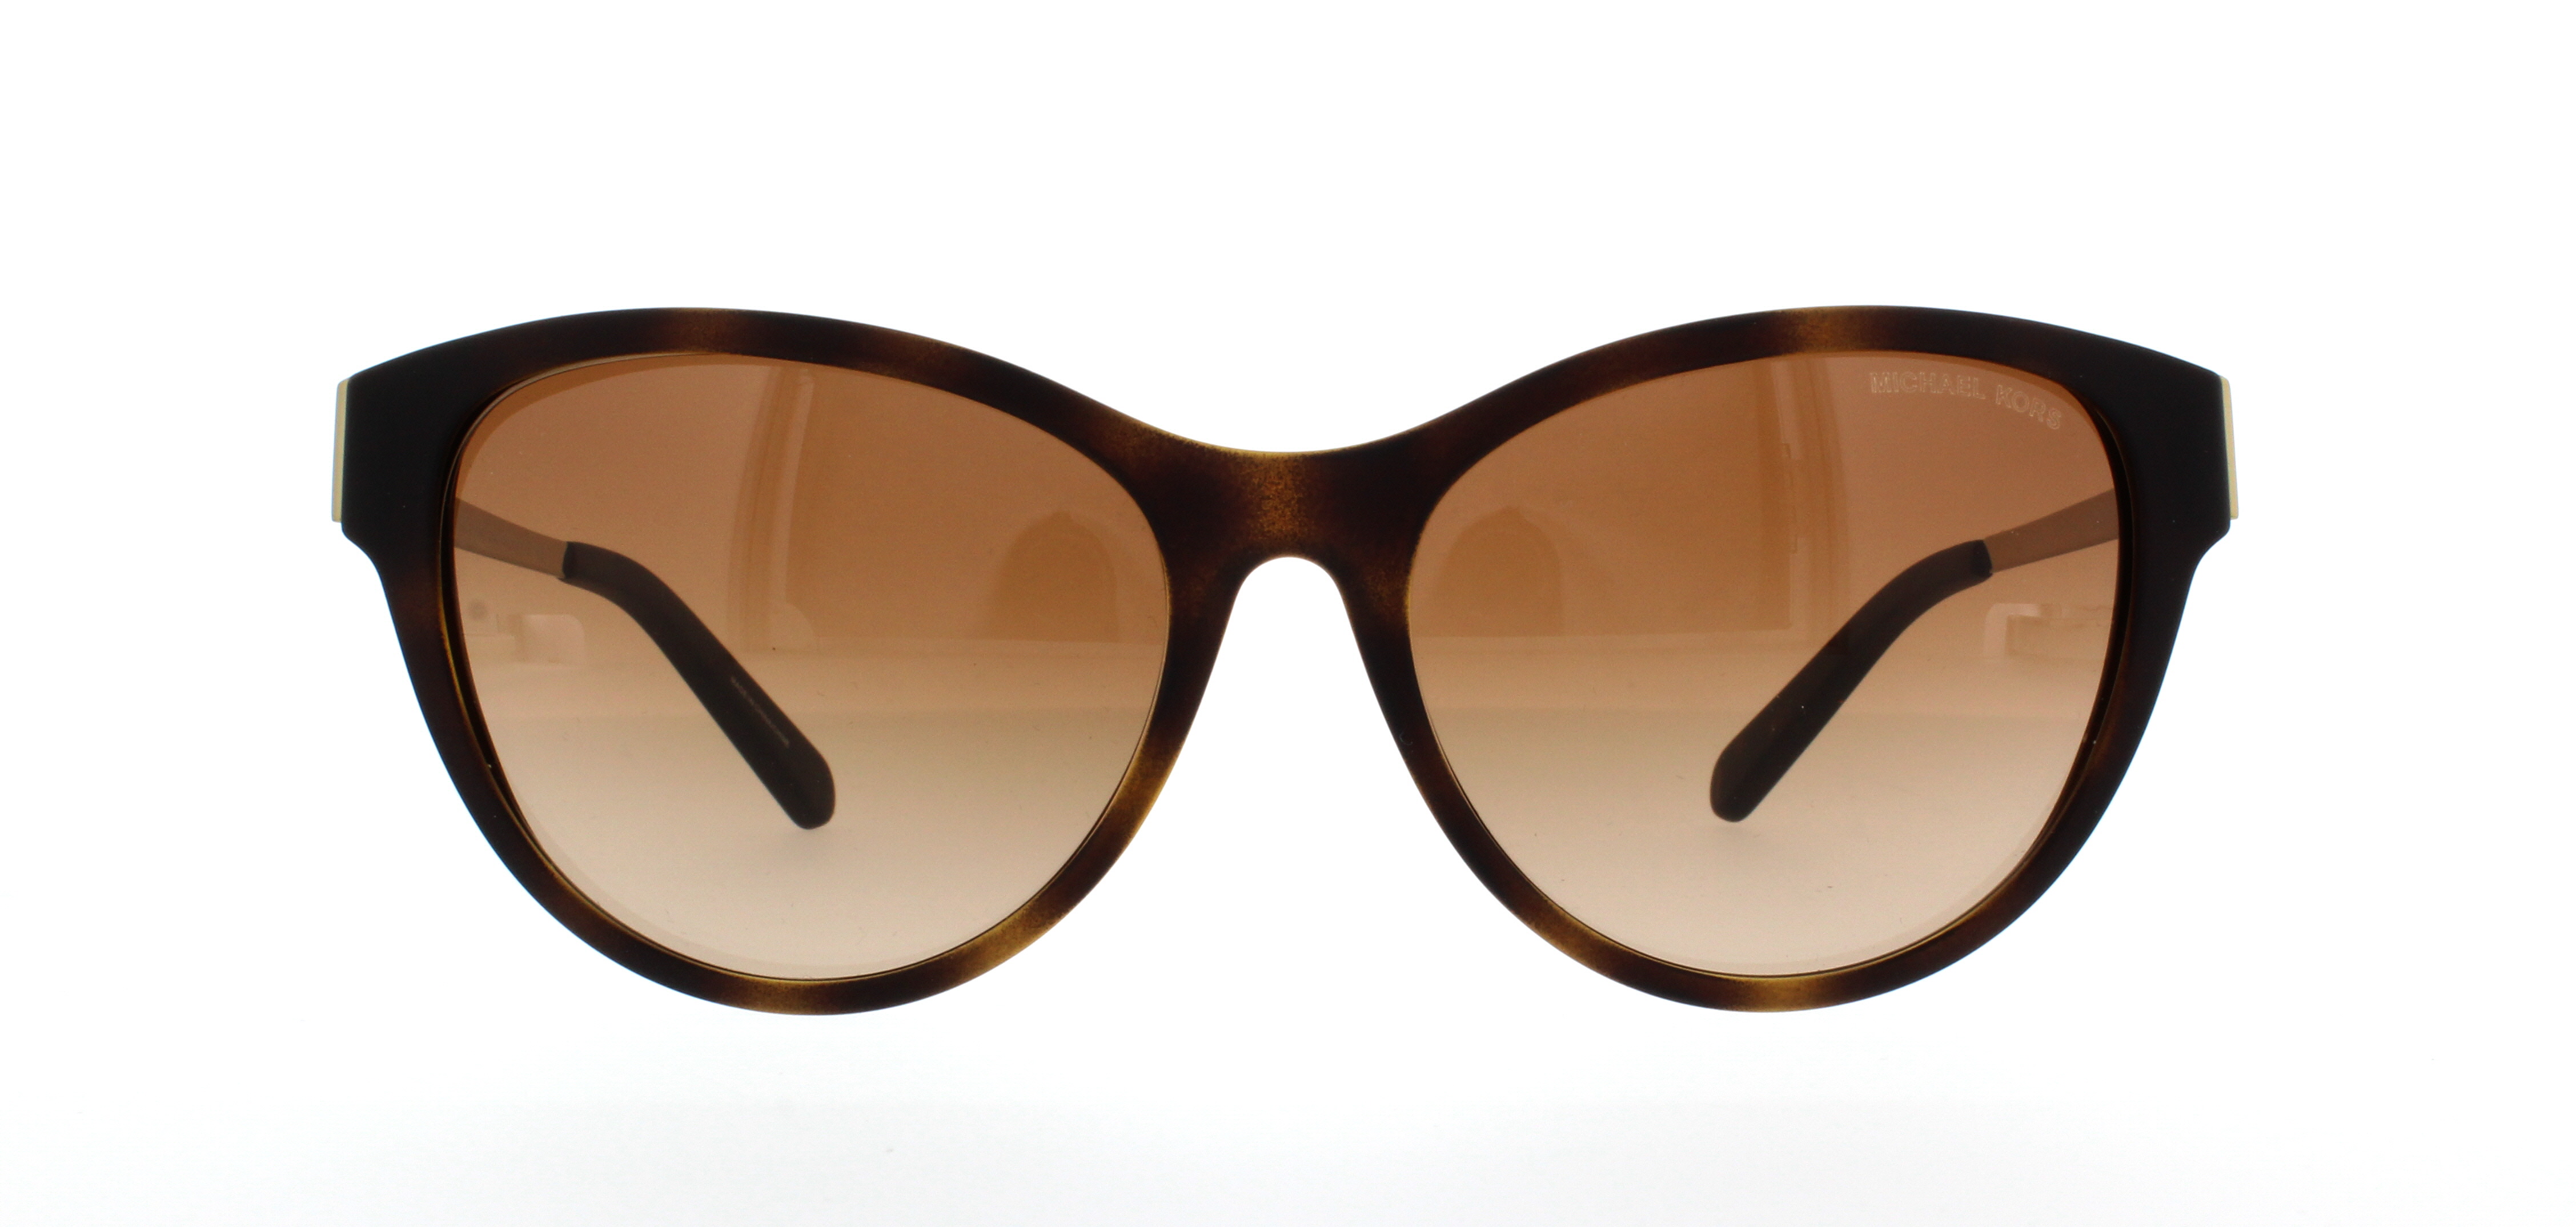 Designer Frames Outlet. Michael Kors Sunglasses MK6014